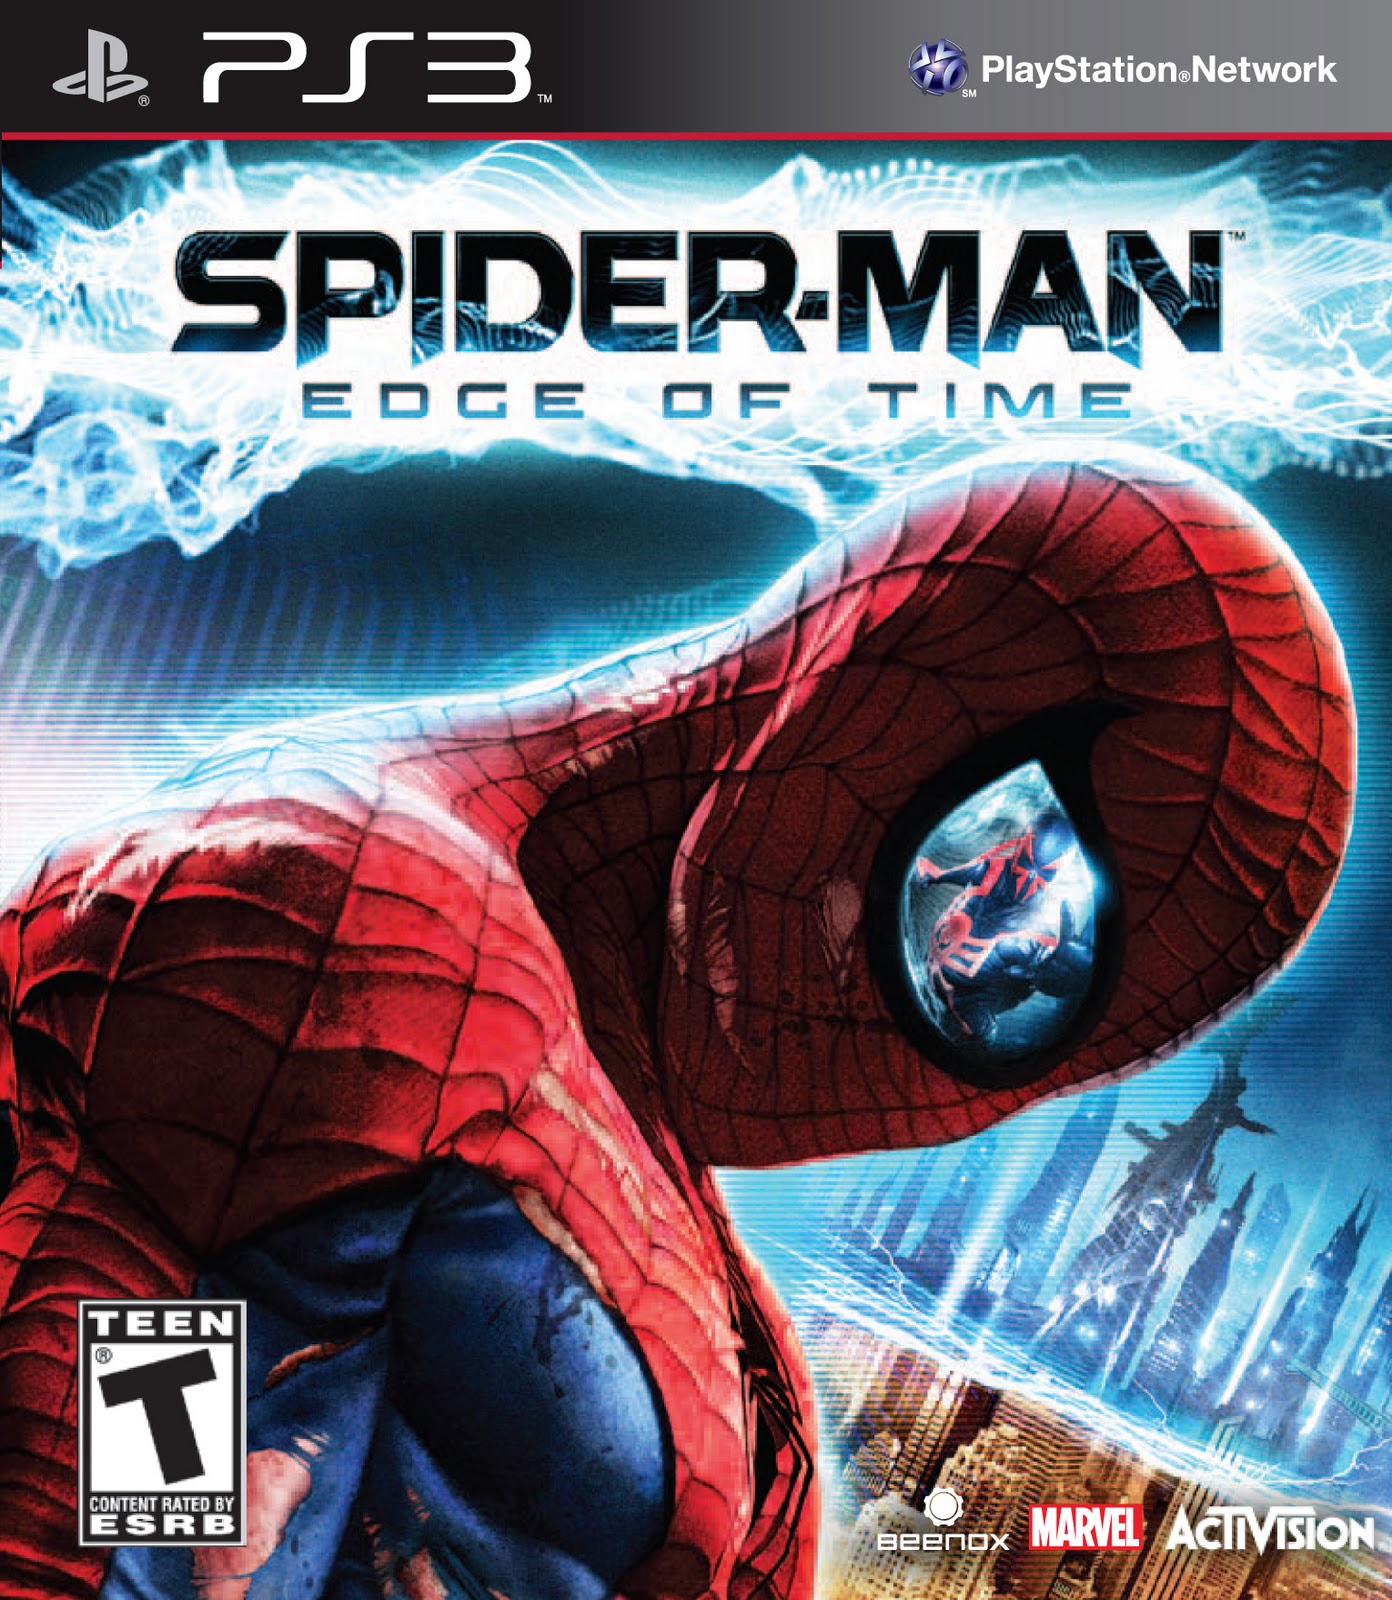 Spider-Man: Shattered Dimensions (Usado) - PS3 - Shock Games